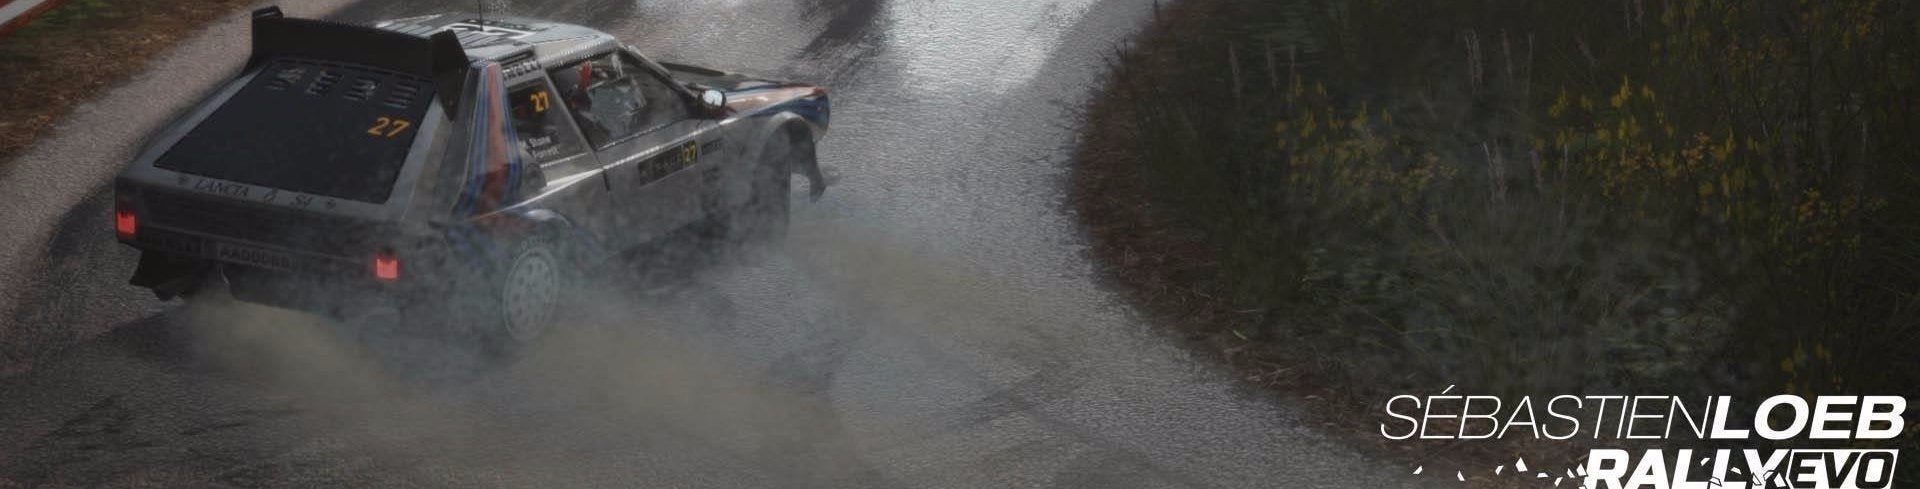 Image for Sébastien Loeb Rally Evo review